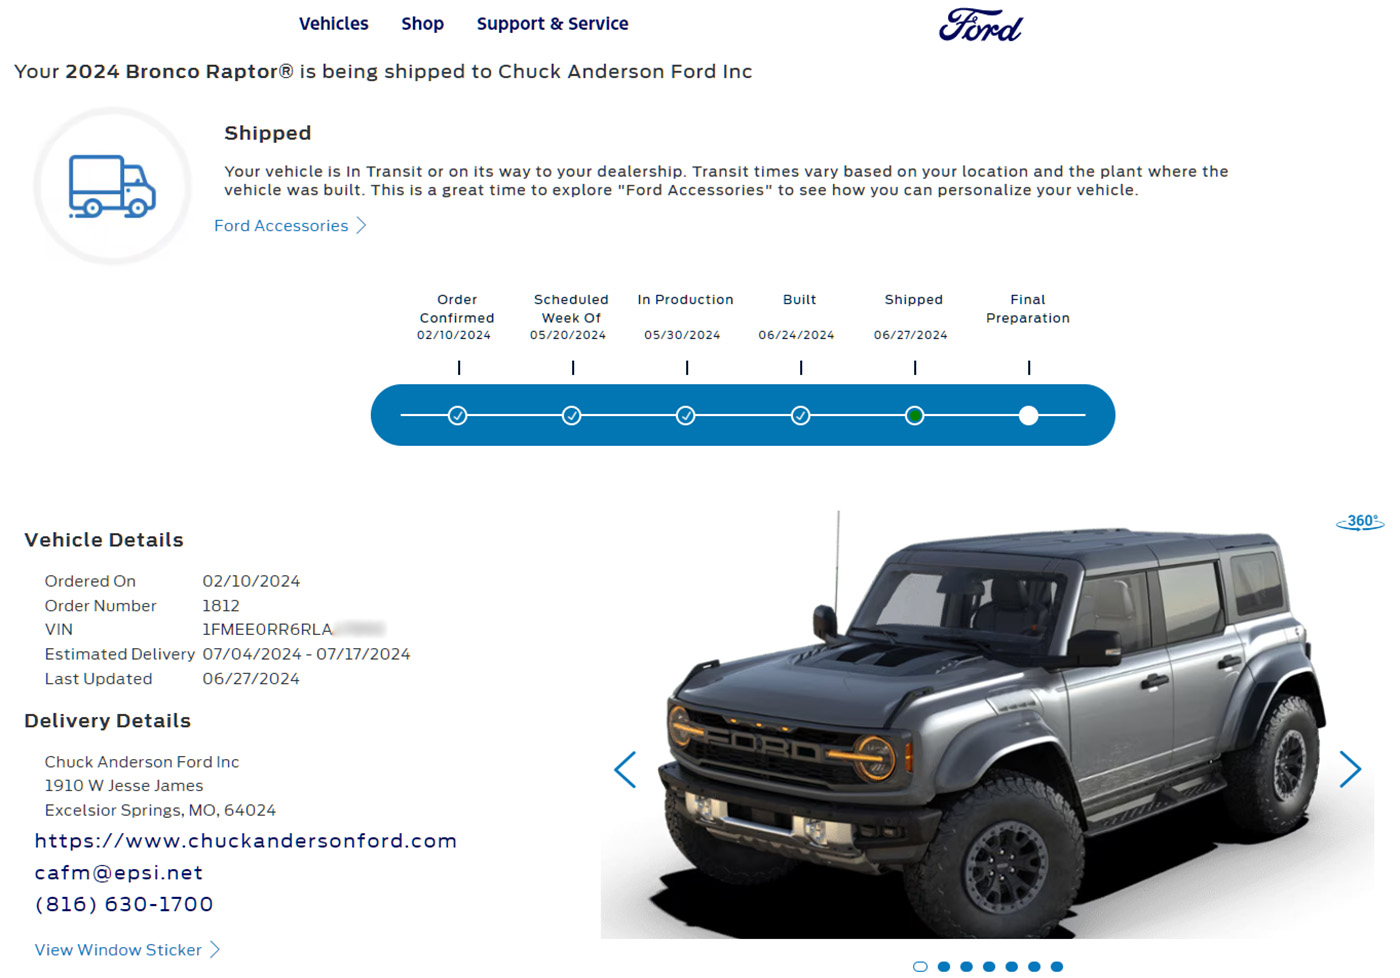 Ford Bronco Bronco Build week 4/29 Screenshot (255) blurred 6 28 2024 updated to shipped